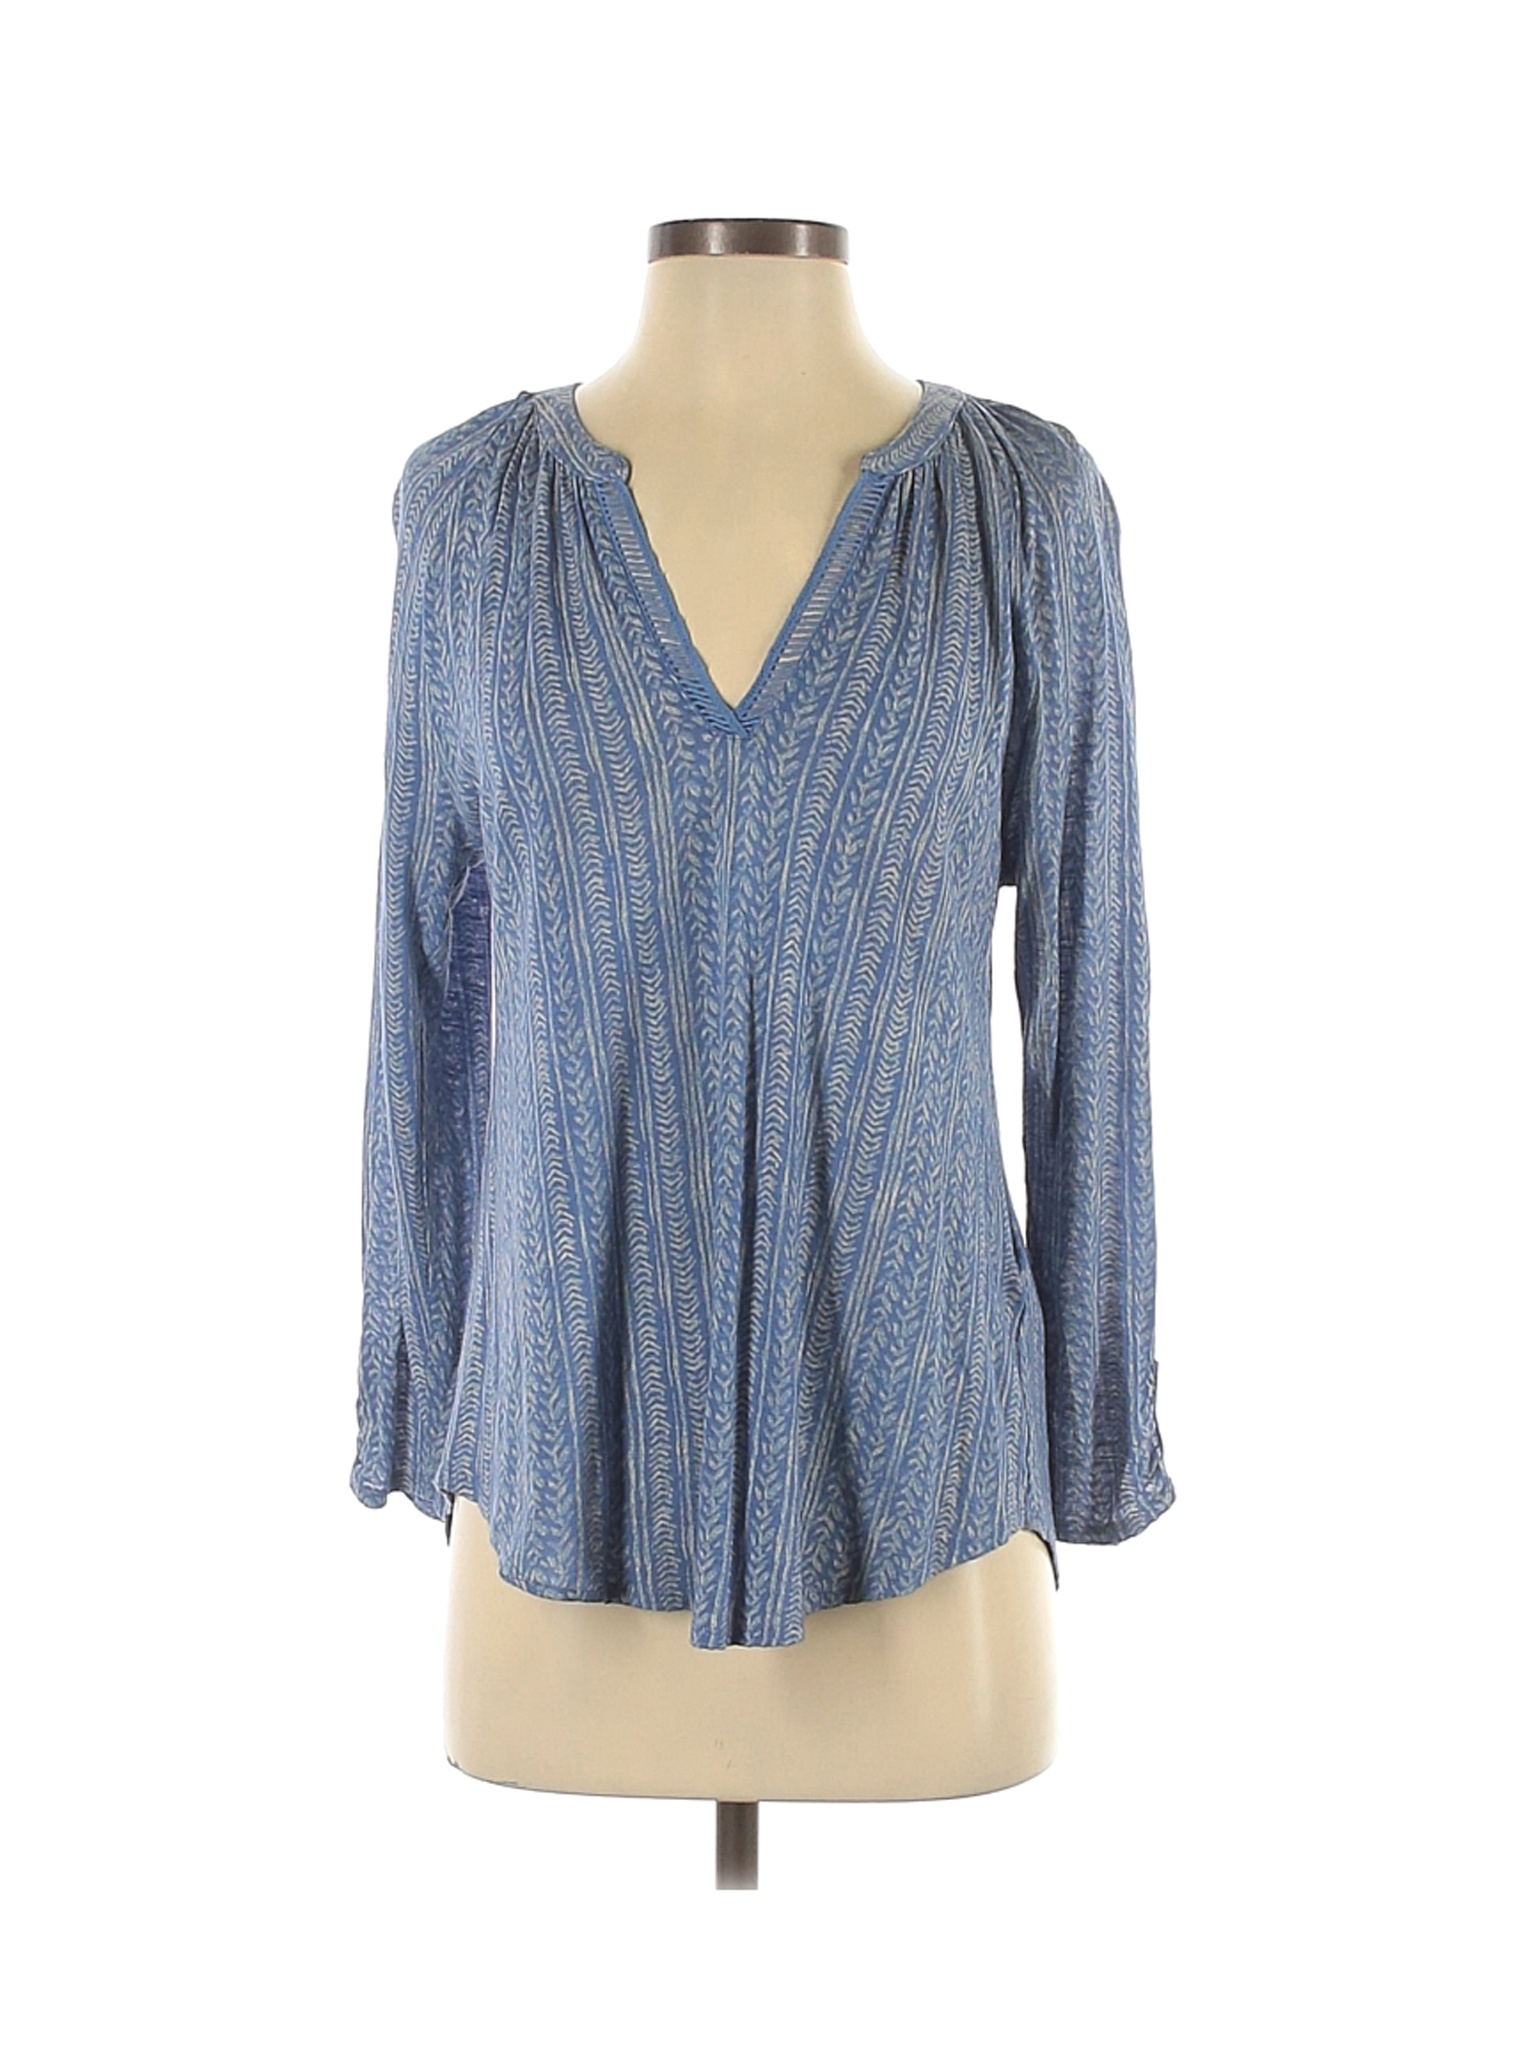 Lucky Brand Women Blue 3/4 Sleeve Top S | eBay